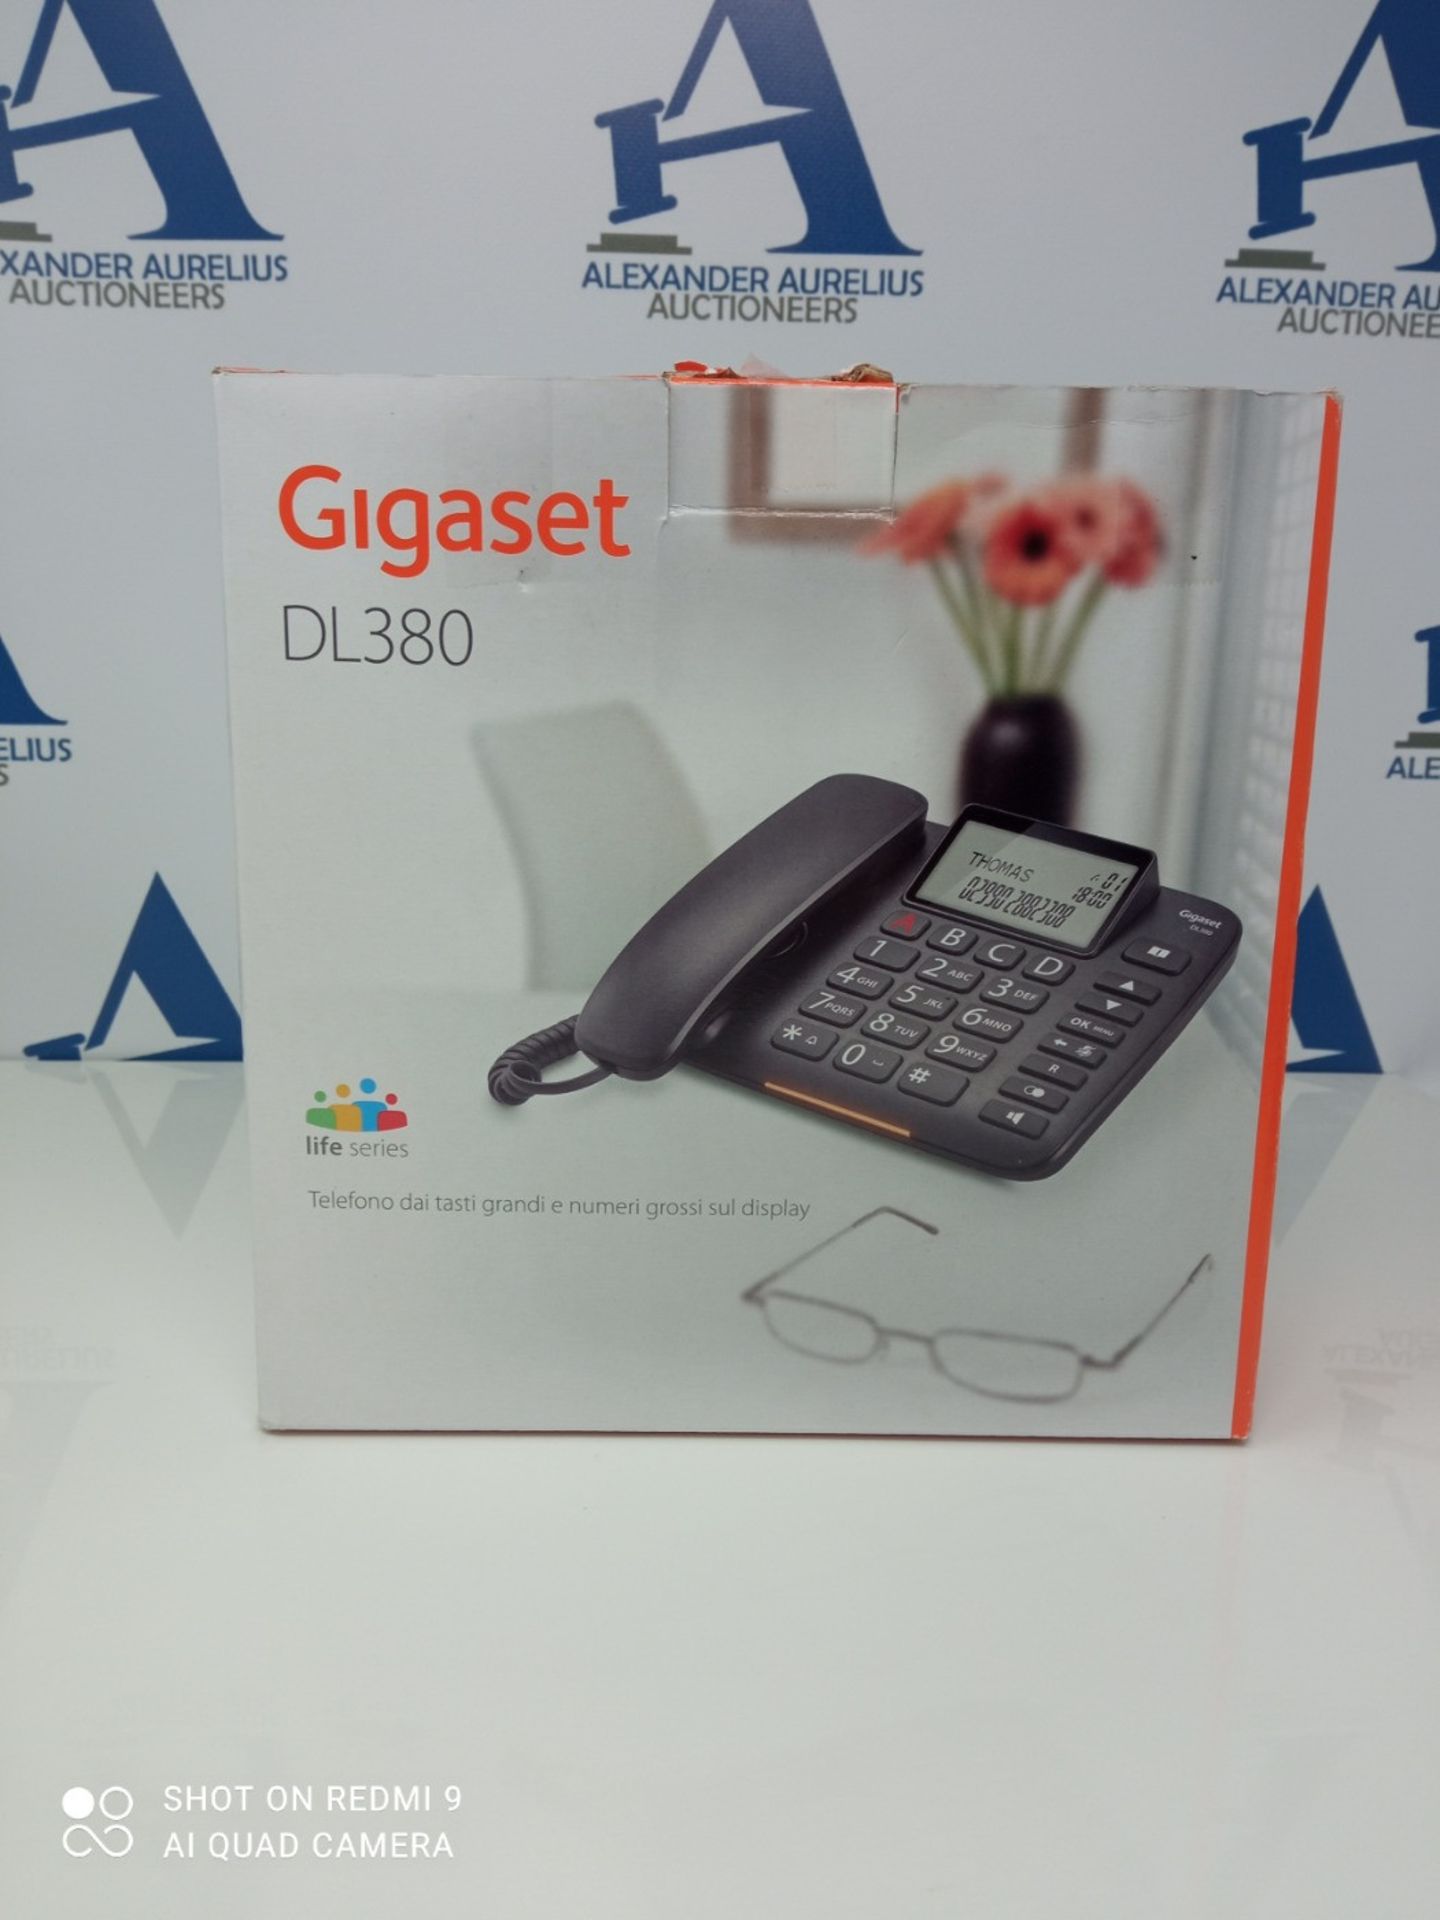 Gigaset DL380 Landline Telephone, Large Display, Large Ergonomic Keys, Call Display vi - Image 2 of 3